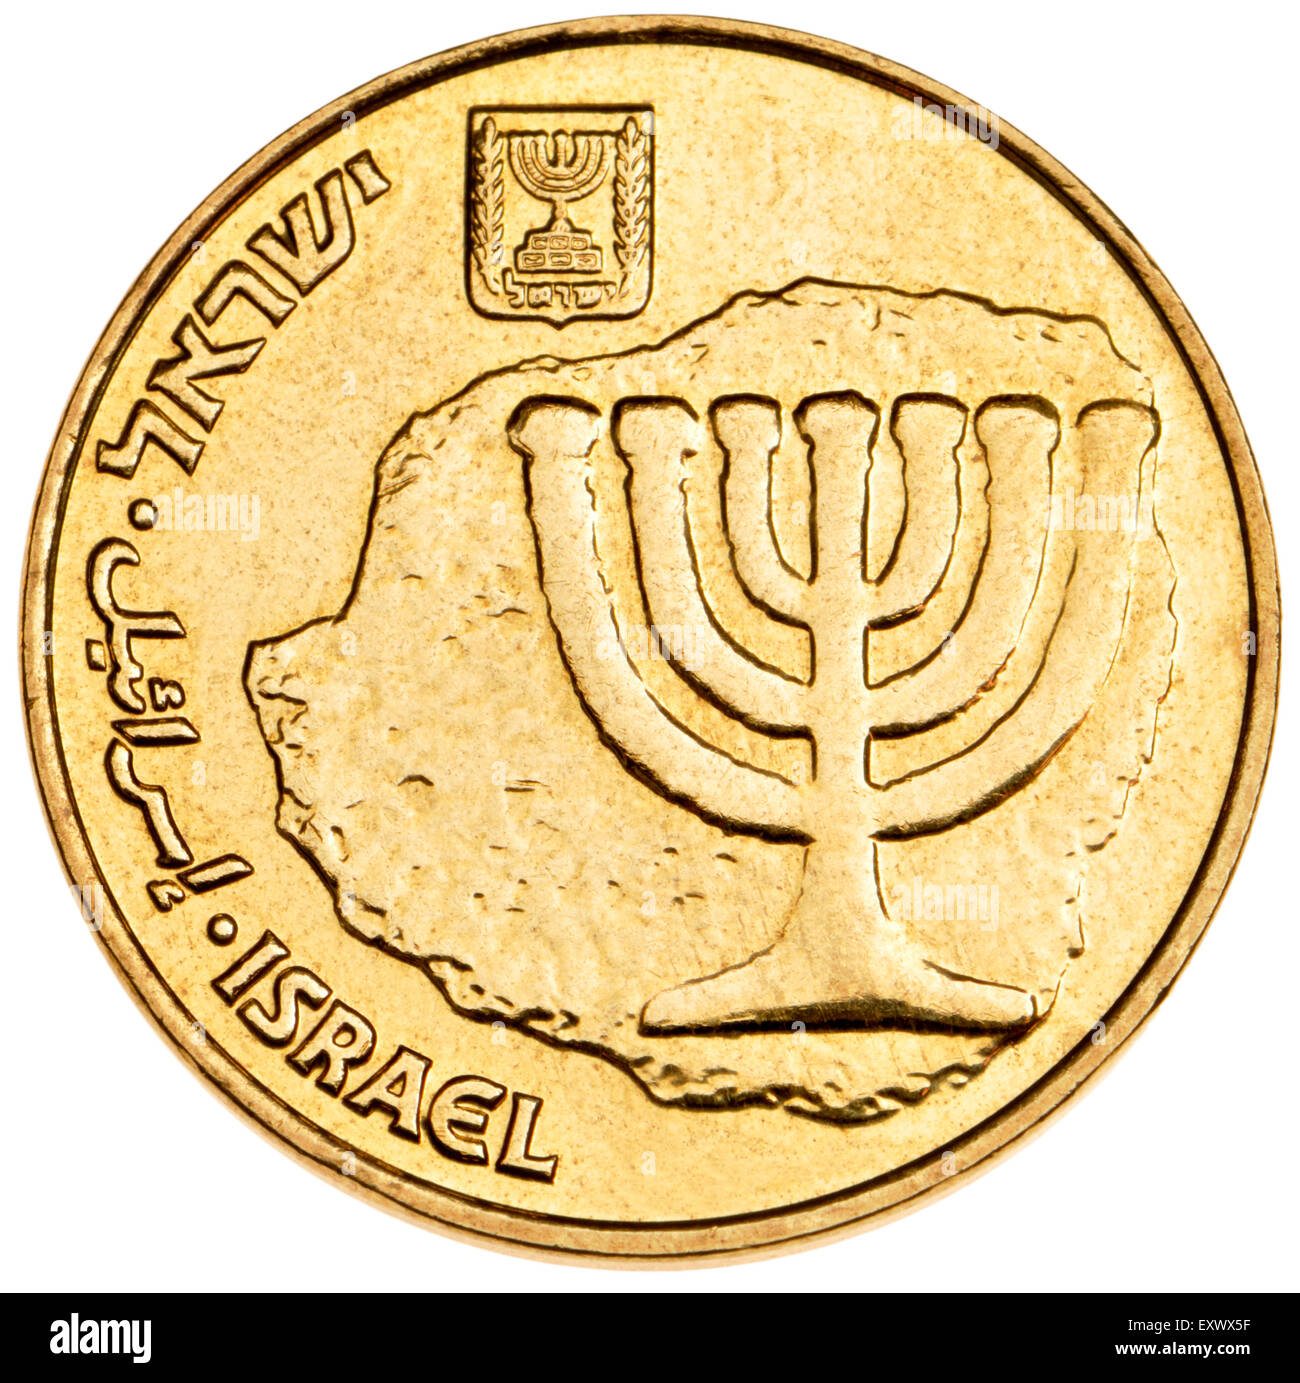 Israel 10 Agorot coin showing a Menorah / Jewish candlestick Stock Photo